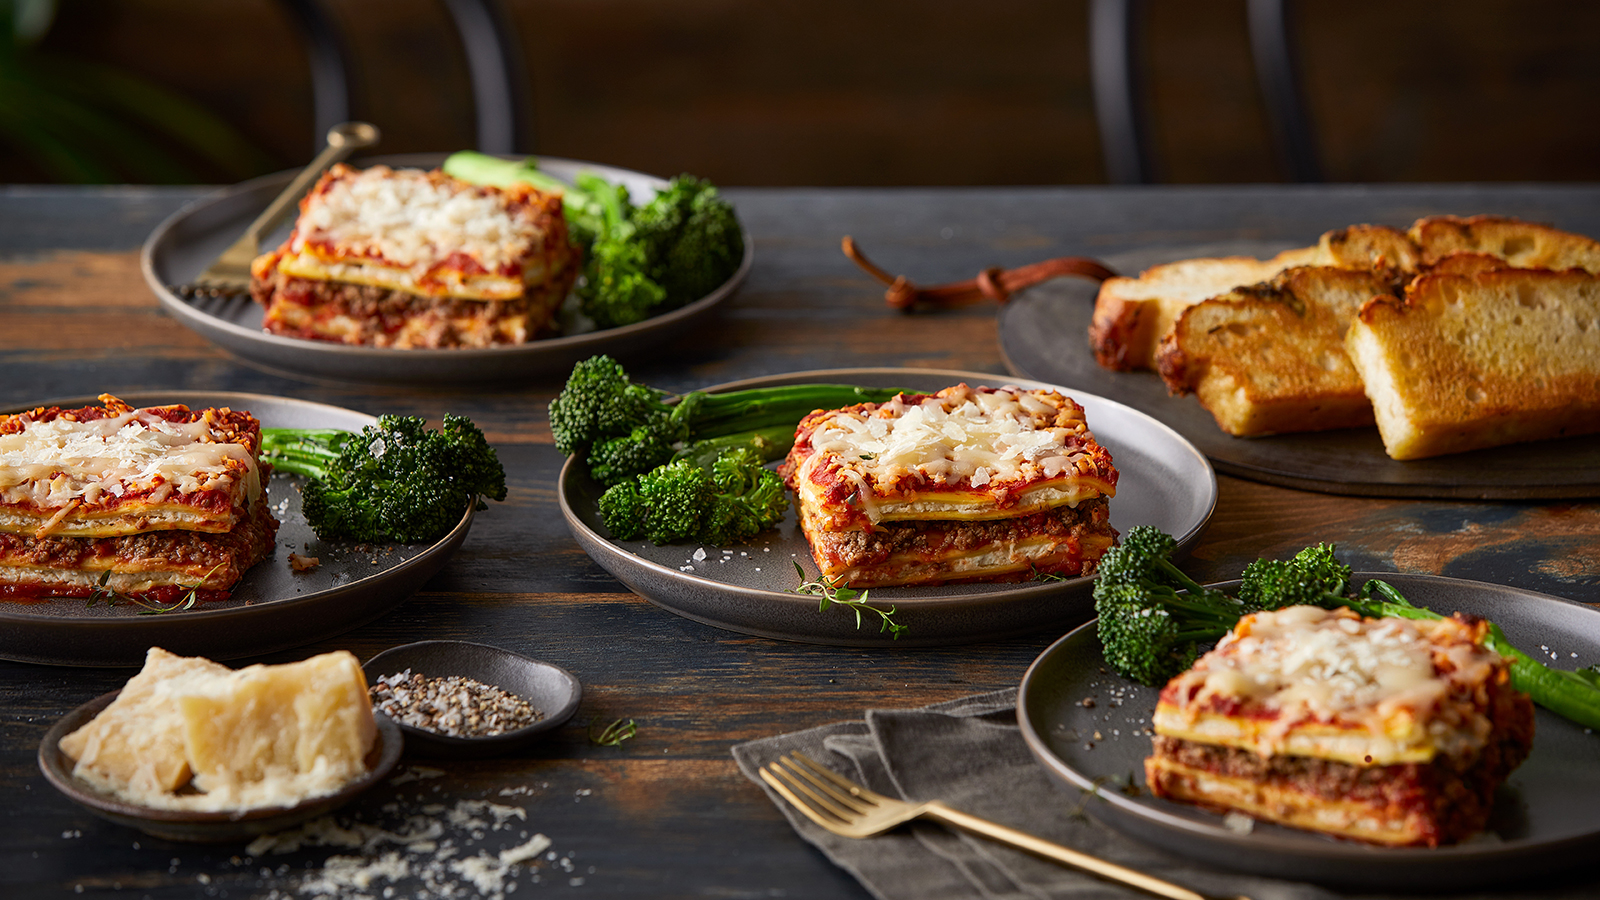 Baked Lasagna and Sautéed Broccolini